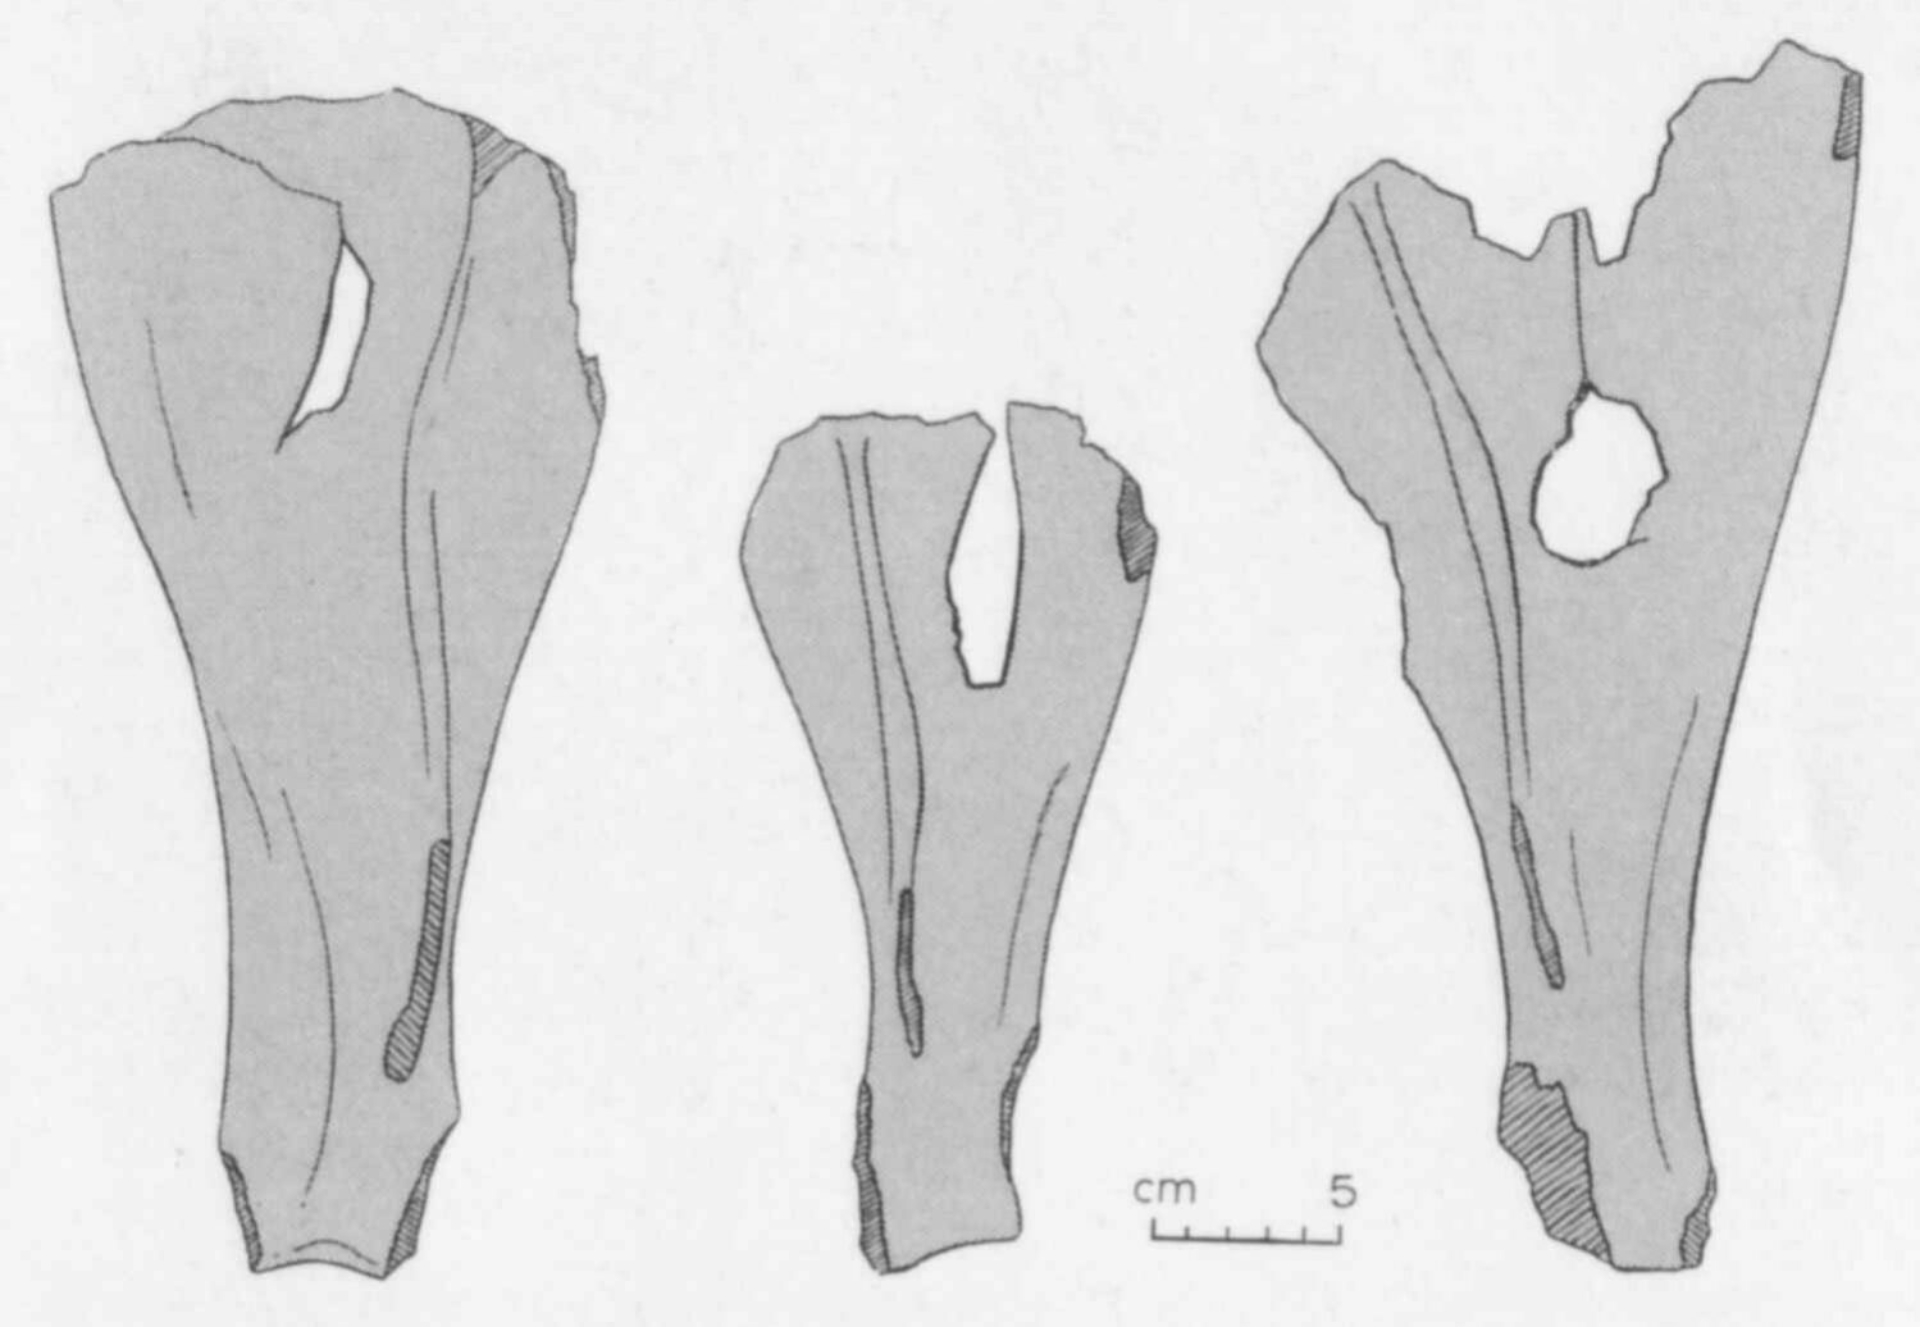 Augusta Raurica - shulder blades of cattle - AMH 12, 25.